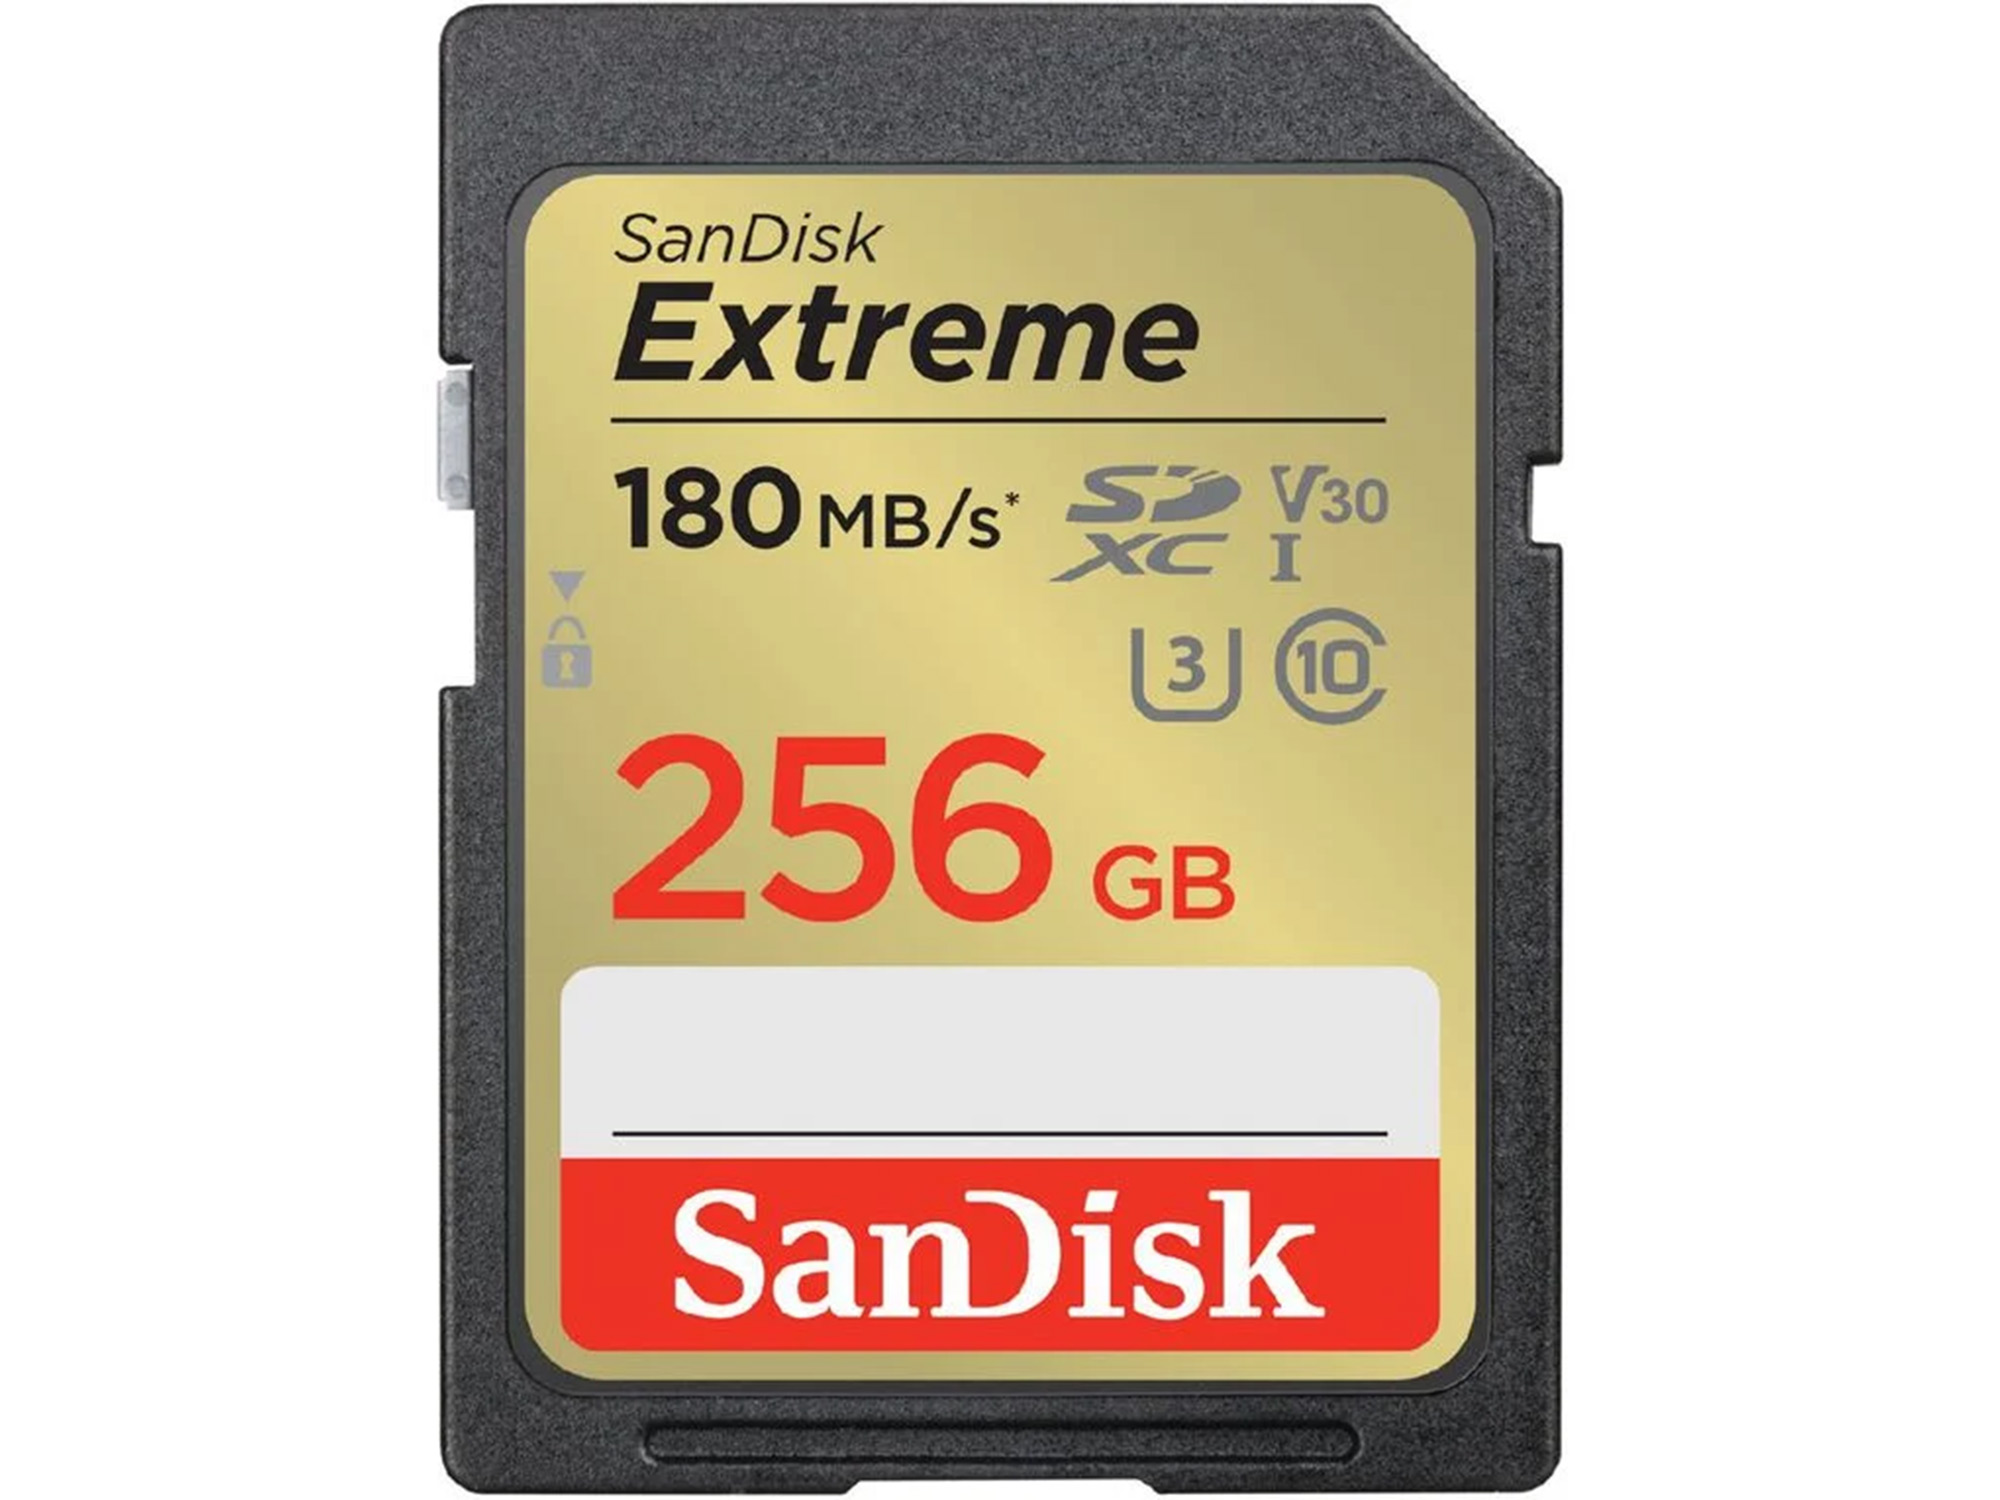 Sandisk SD Extreme SDHC/SDXC Memory Card - 256GB